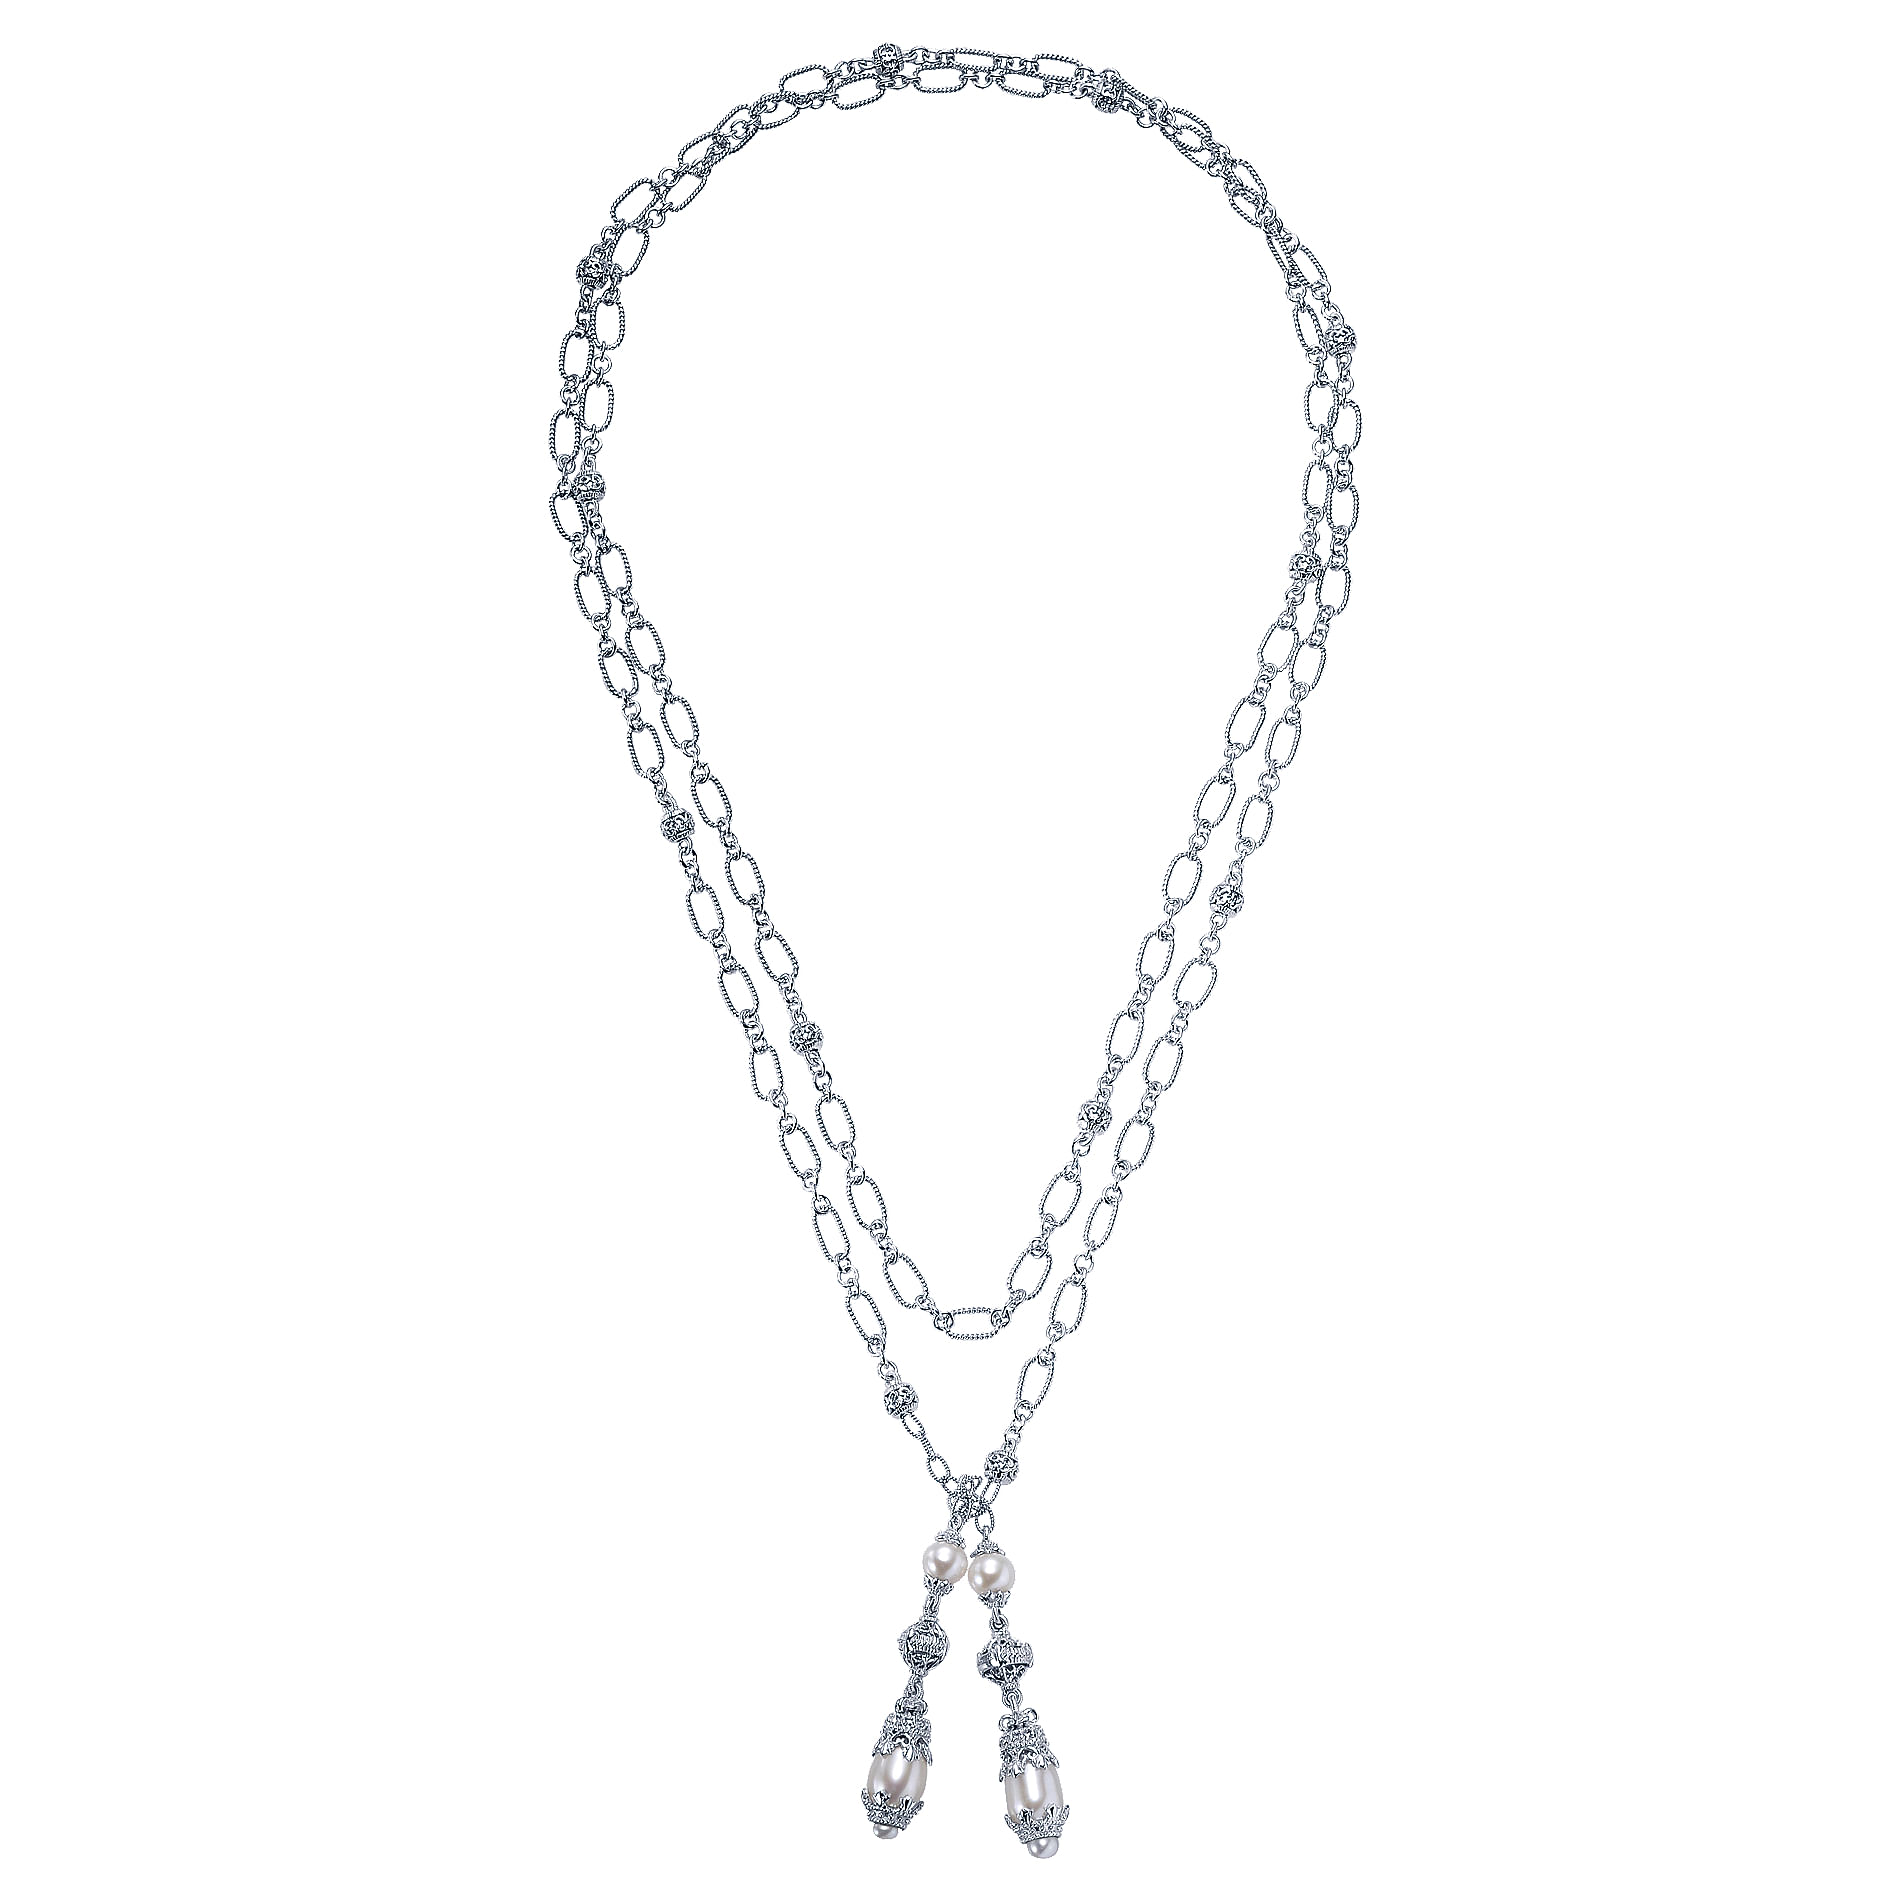 44 inch Silver Fashion Necklace